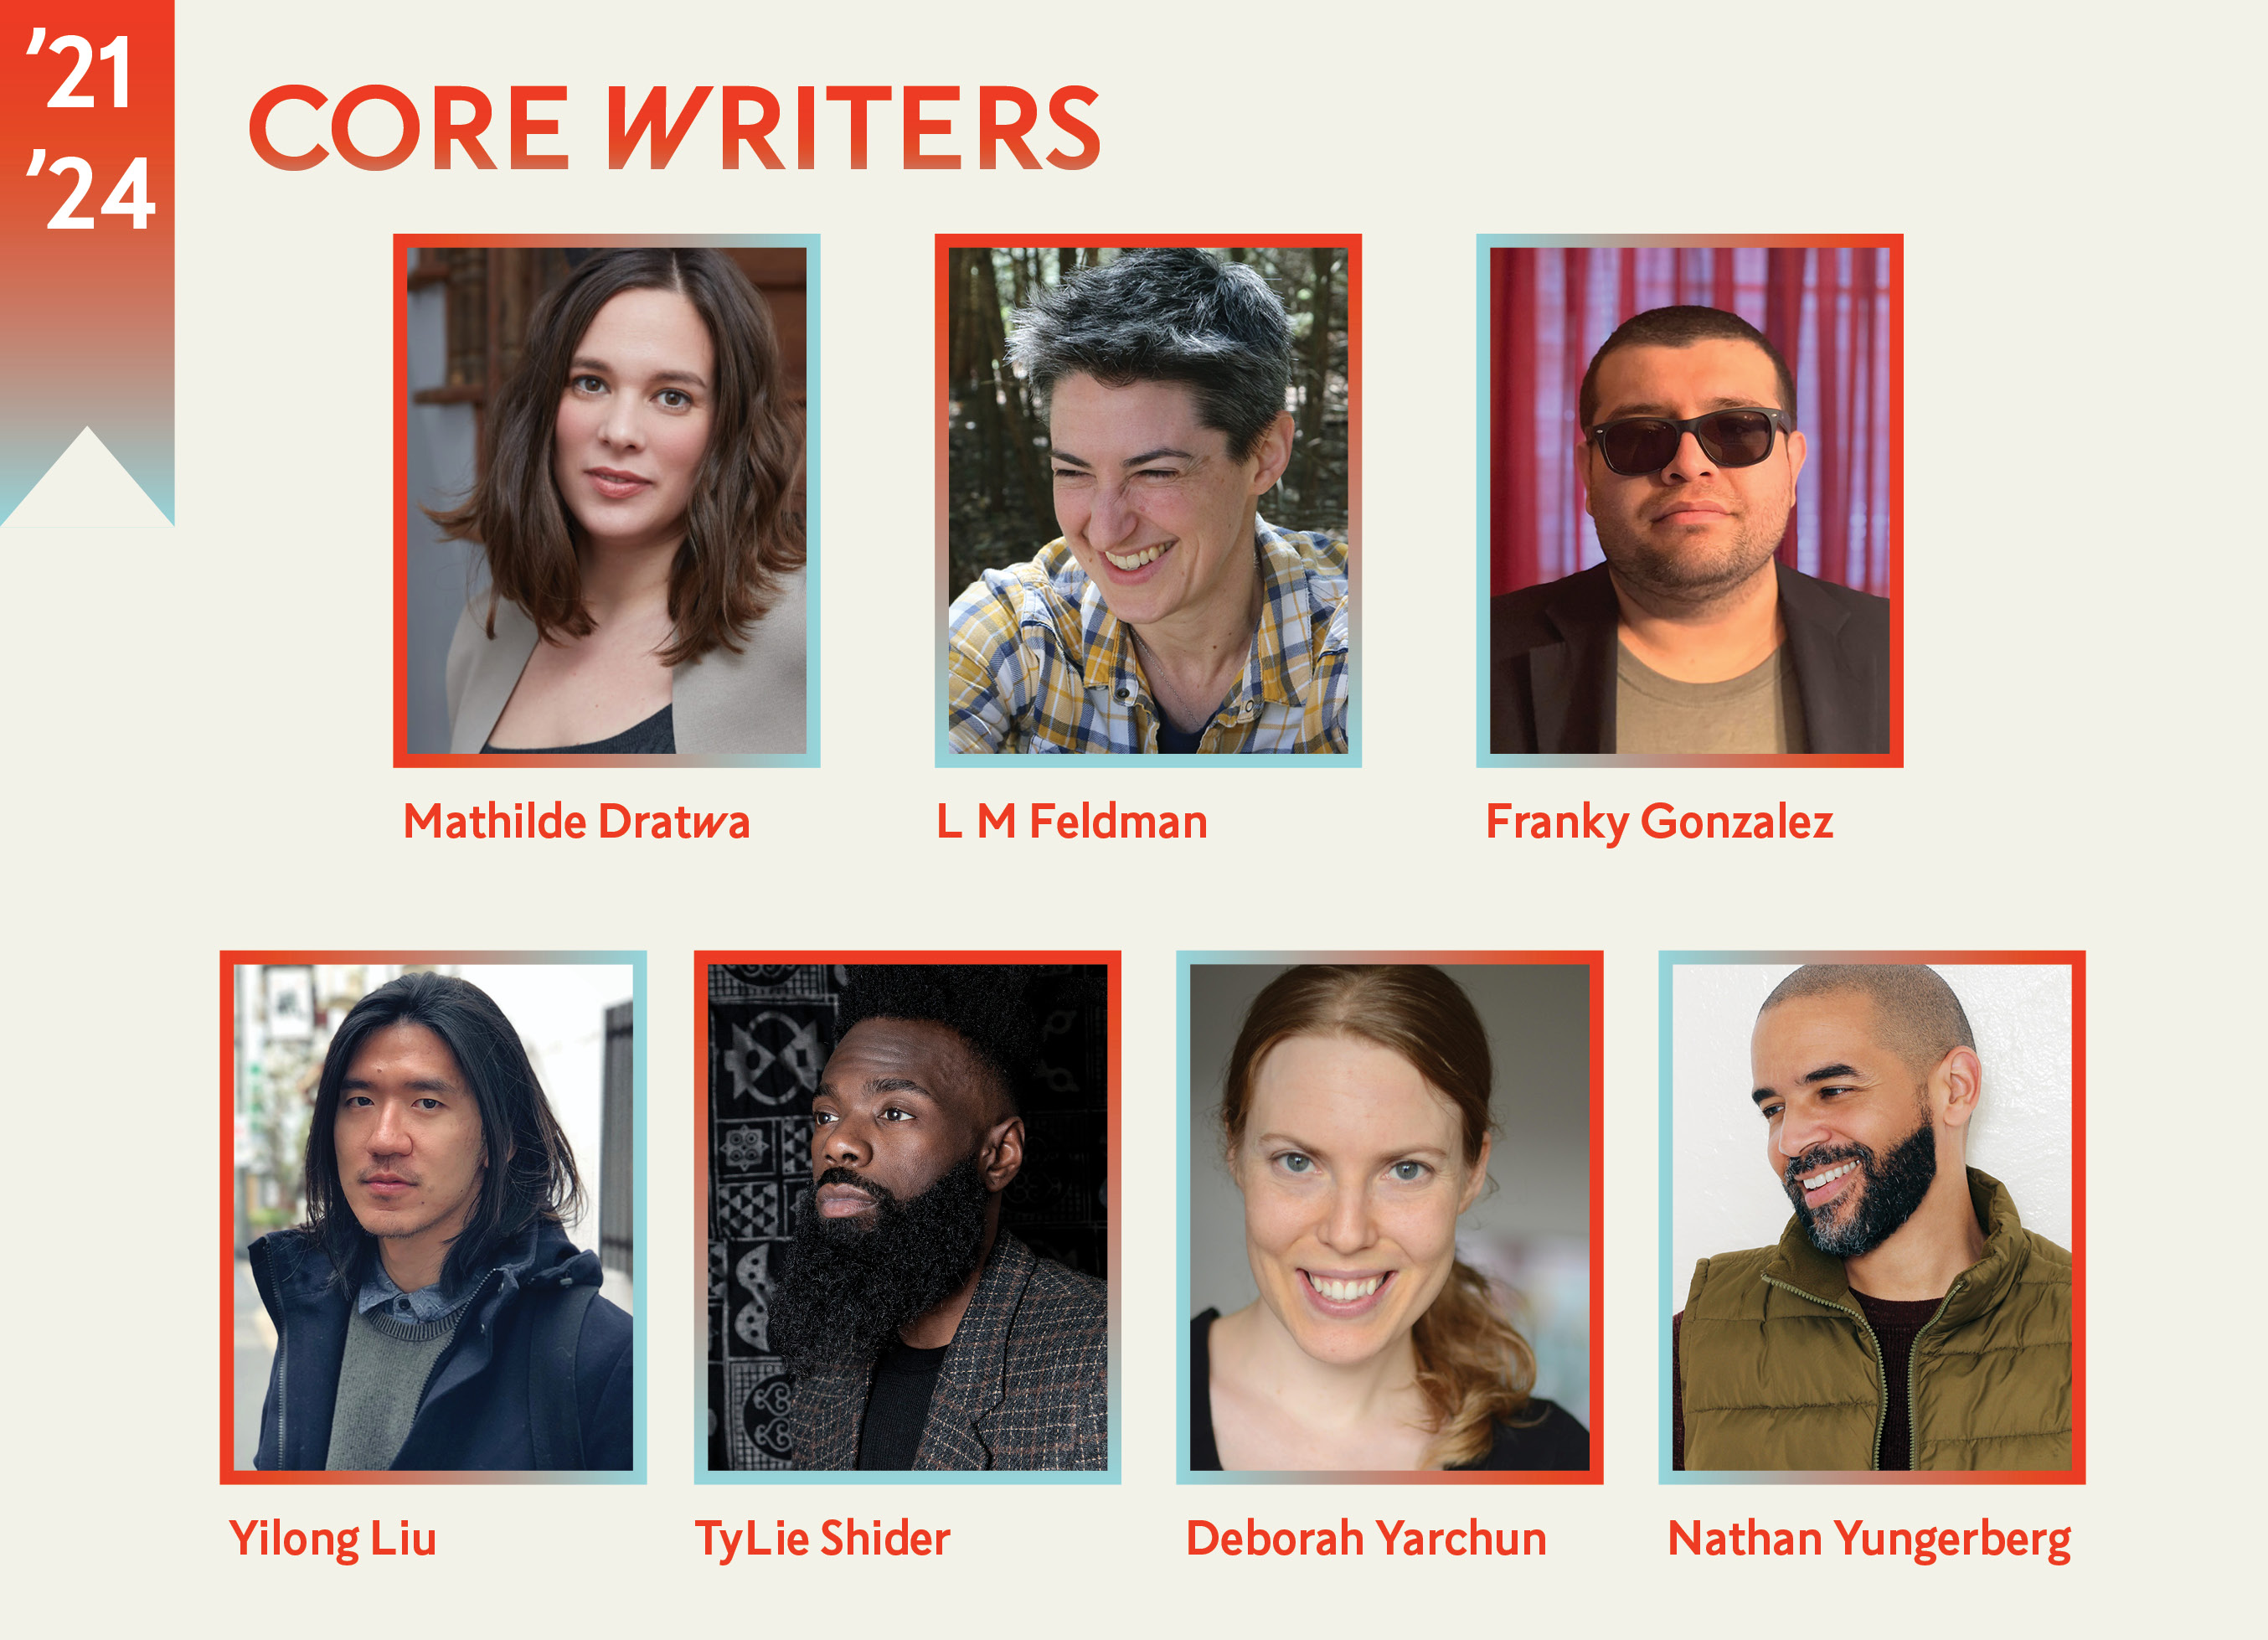 The headshots of the 2021-2024 Core Writers Mathilde Dratwa, L M Feldman, Franky D. Gonzalez, Yilong Liu, TyLie Shider, Deborah Yarchun, and Nathan Yungerberg.